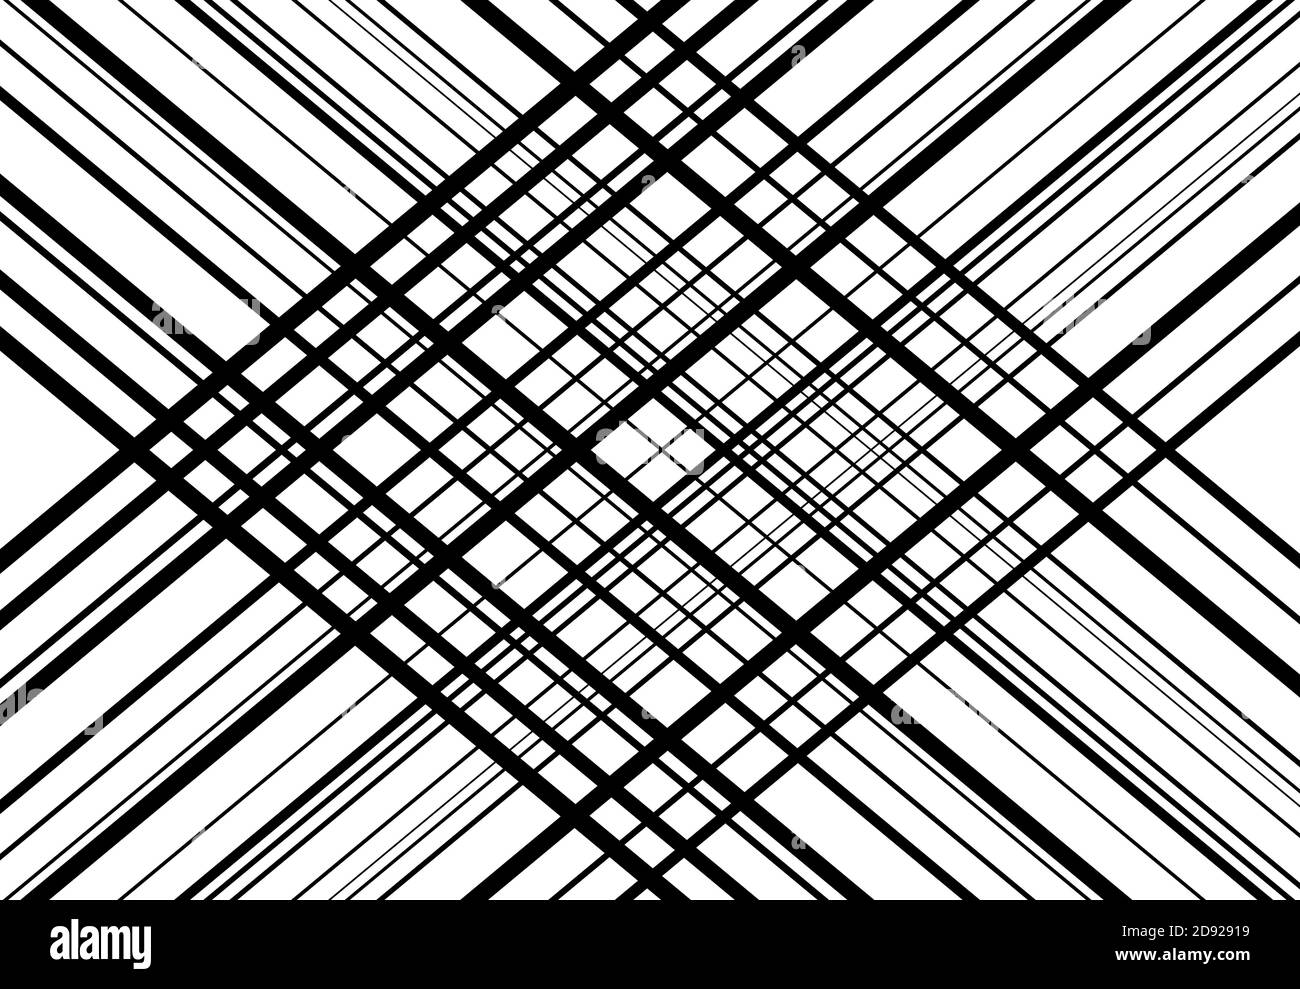 Network grid, mesh. Lattice, grating, trellis pattern, background and ...